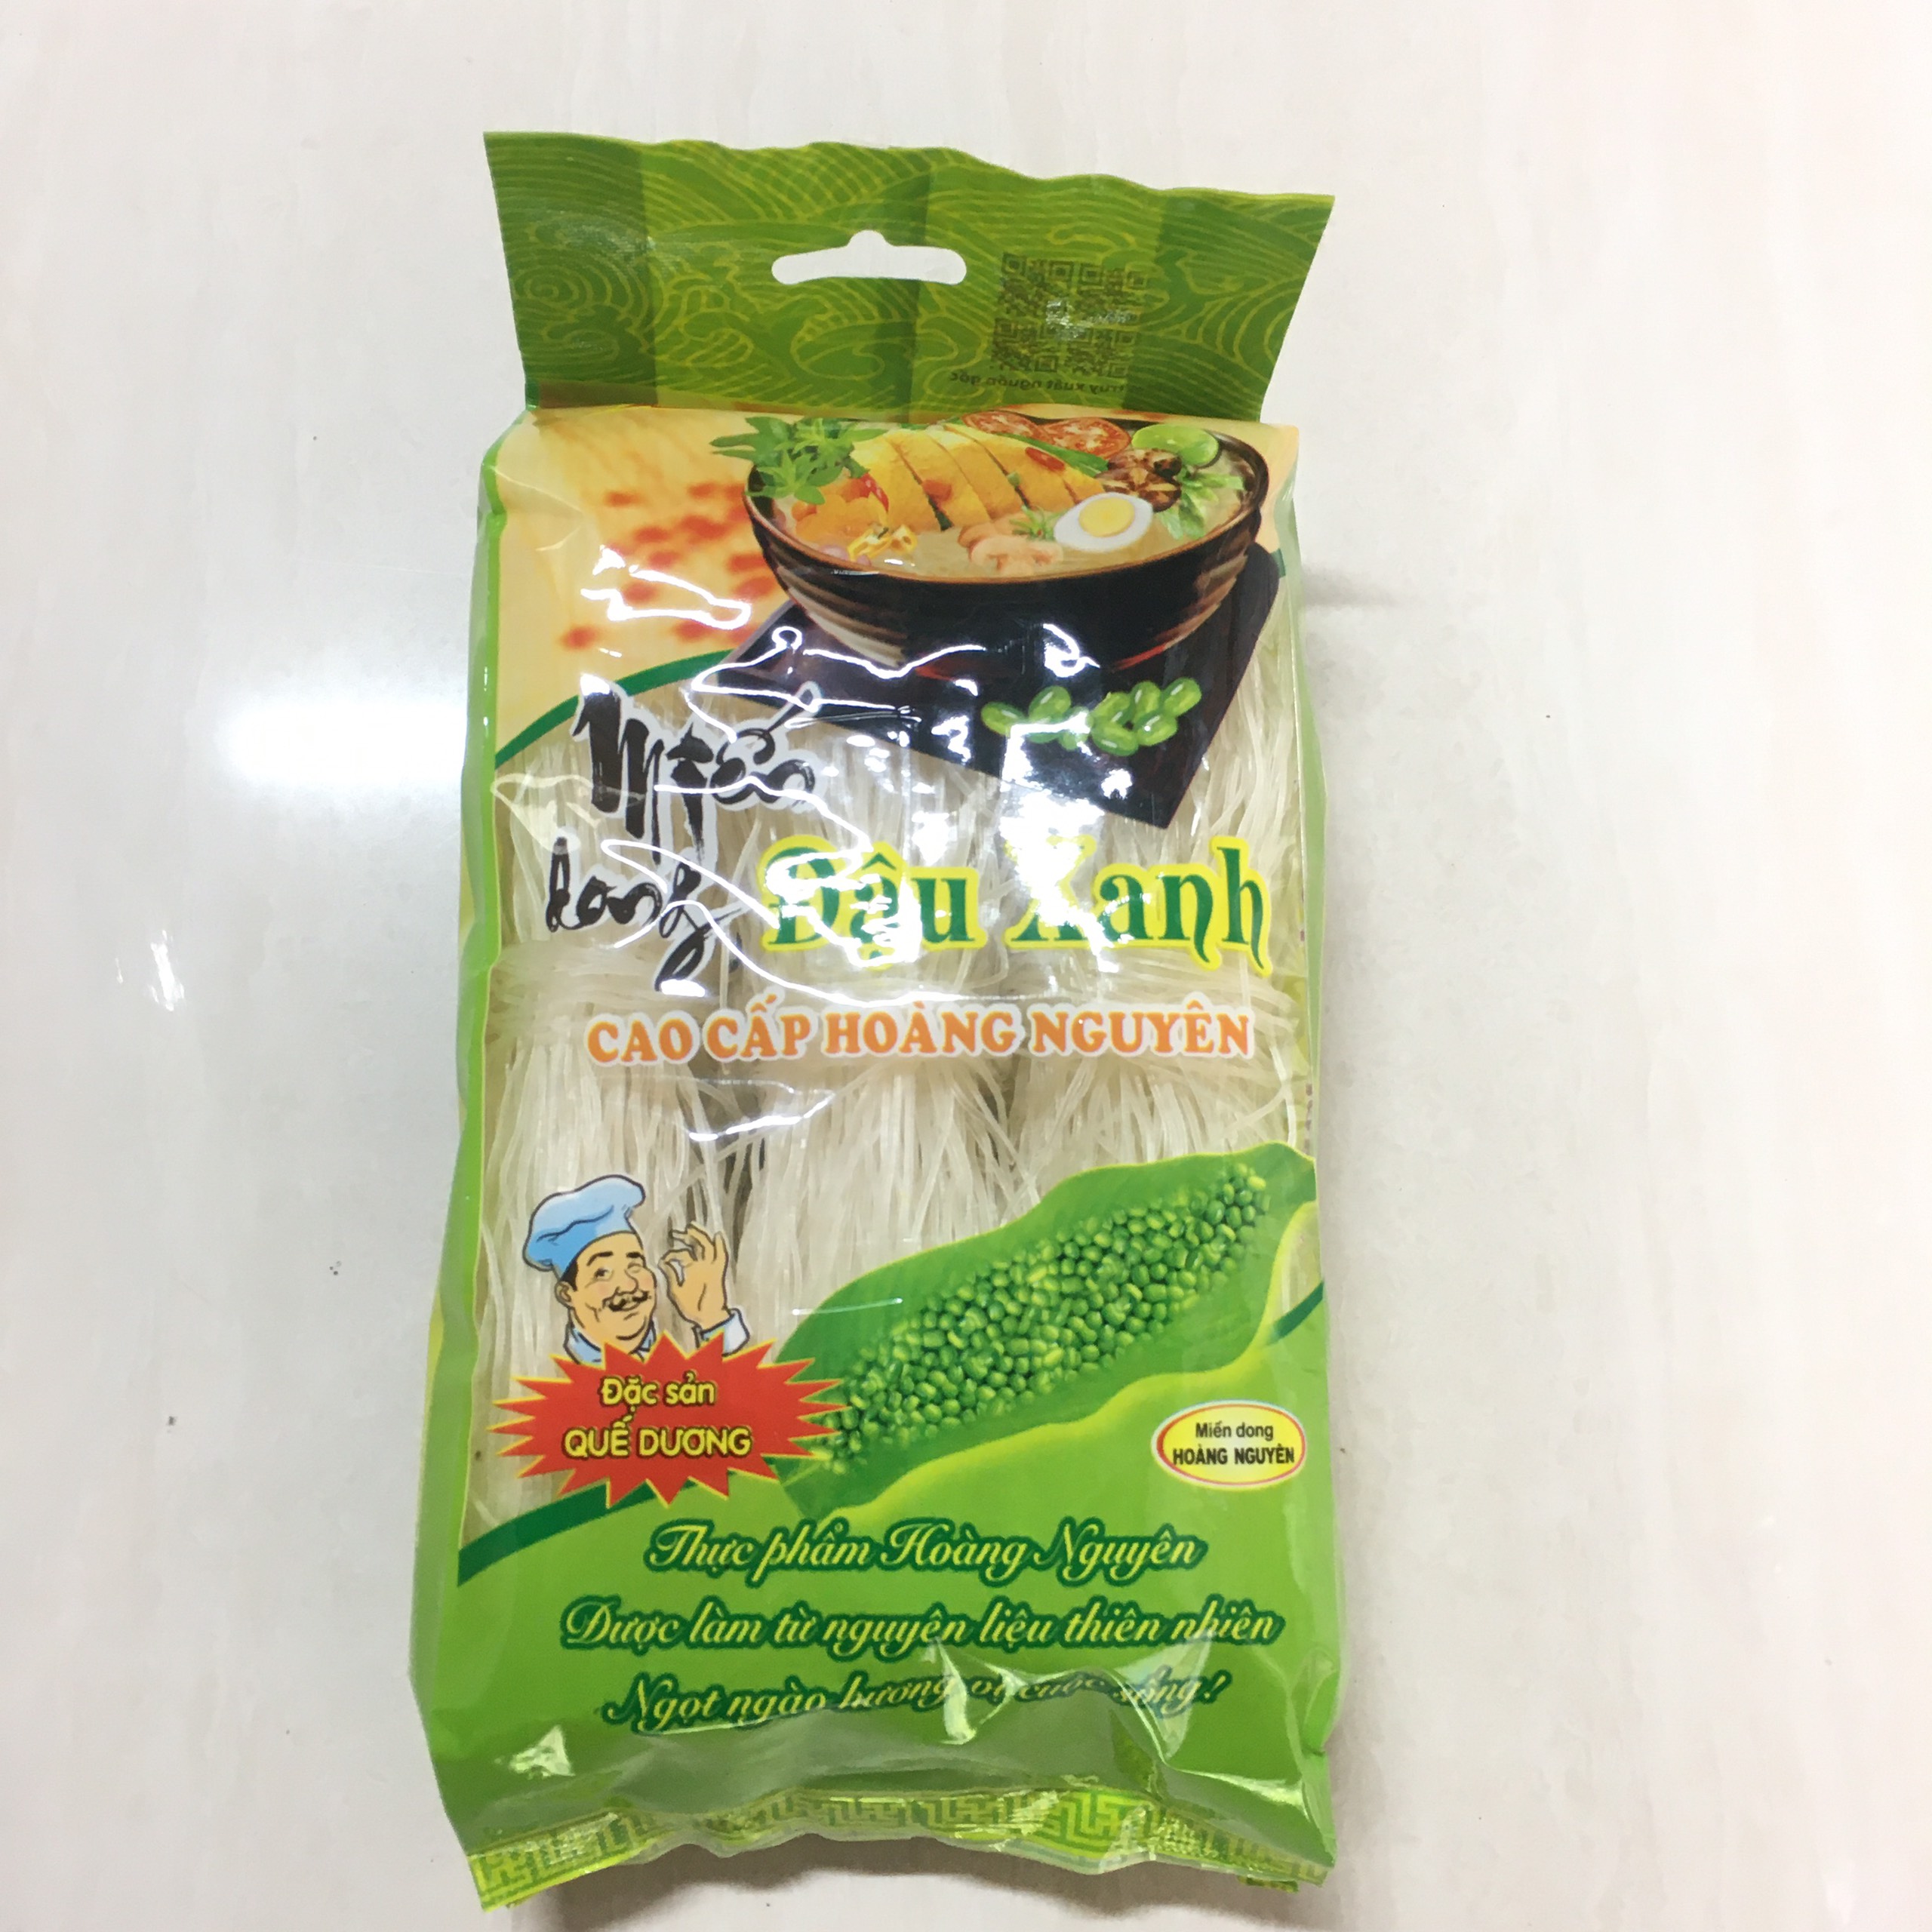 Dry Vermicelli Best Selling Green Bean Vermicelli 12 Months Food OCOP Bag Vietnam Manufacturer 2